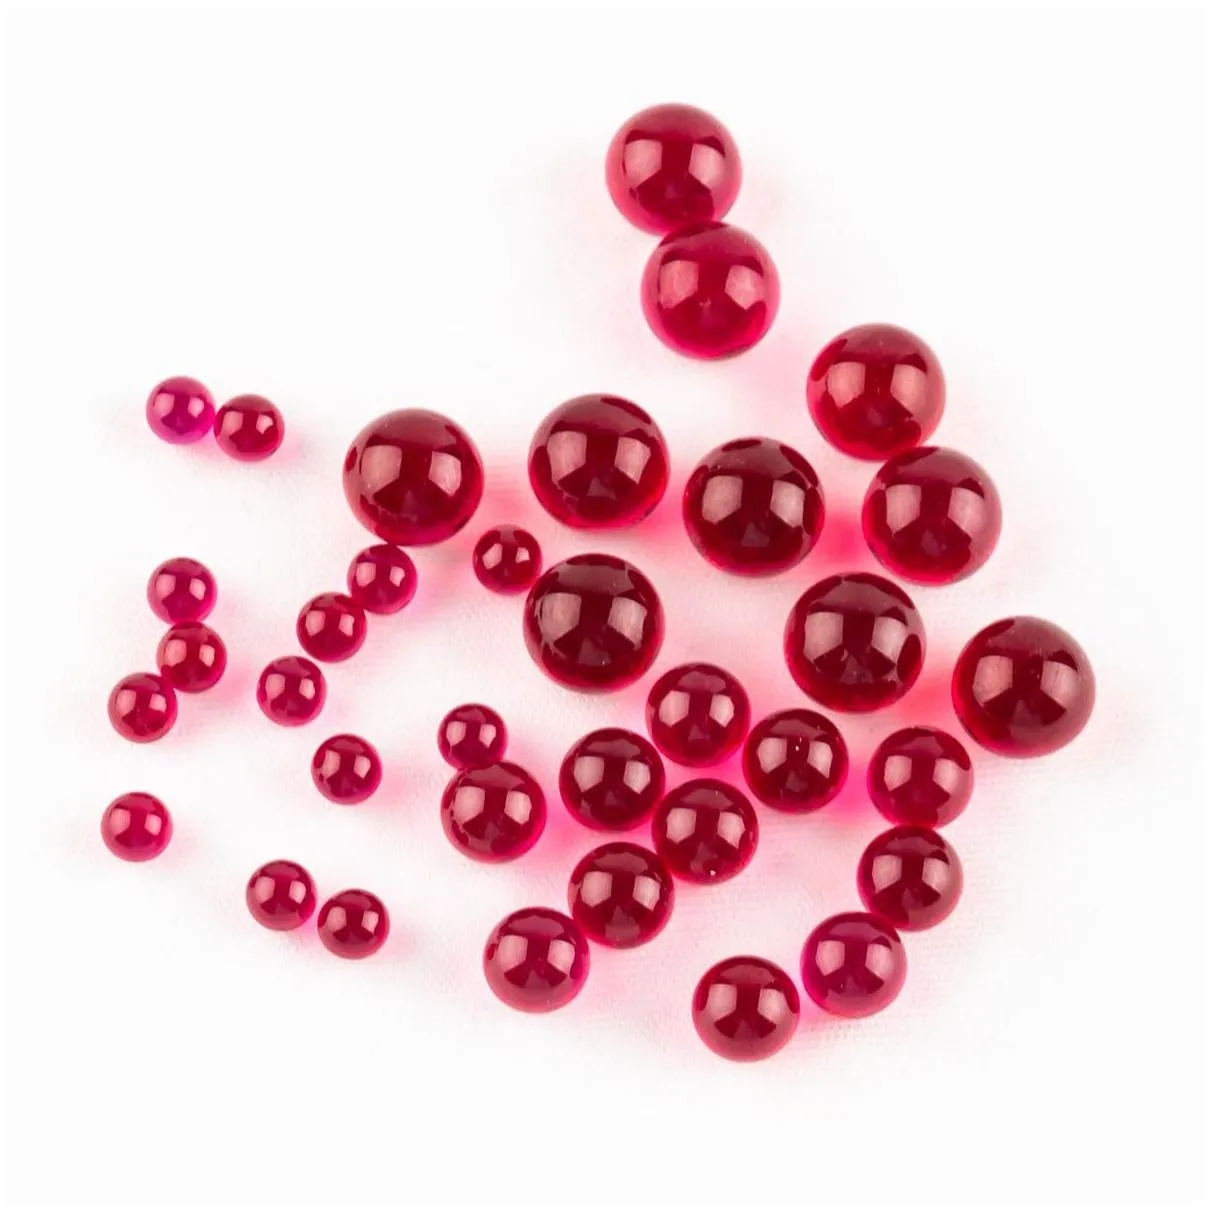 hookahs 4mm 6mm 8mm ruby terp pearl dab beads insert for 25mm 30mm quartz banger nails hookahs glass bongs